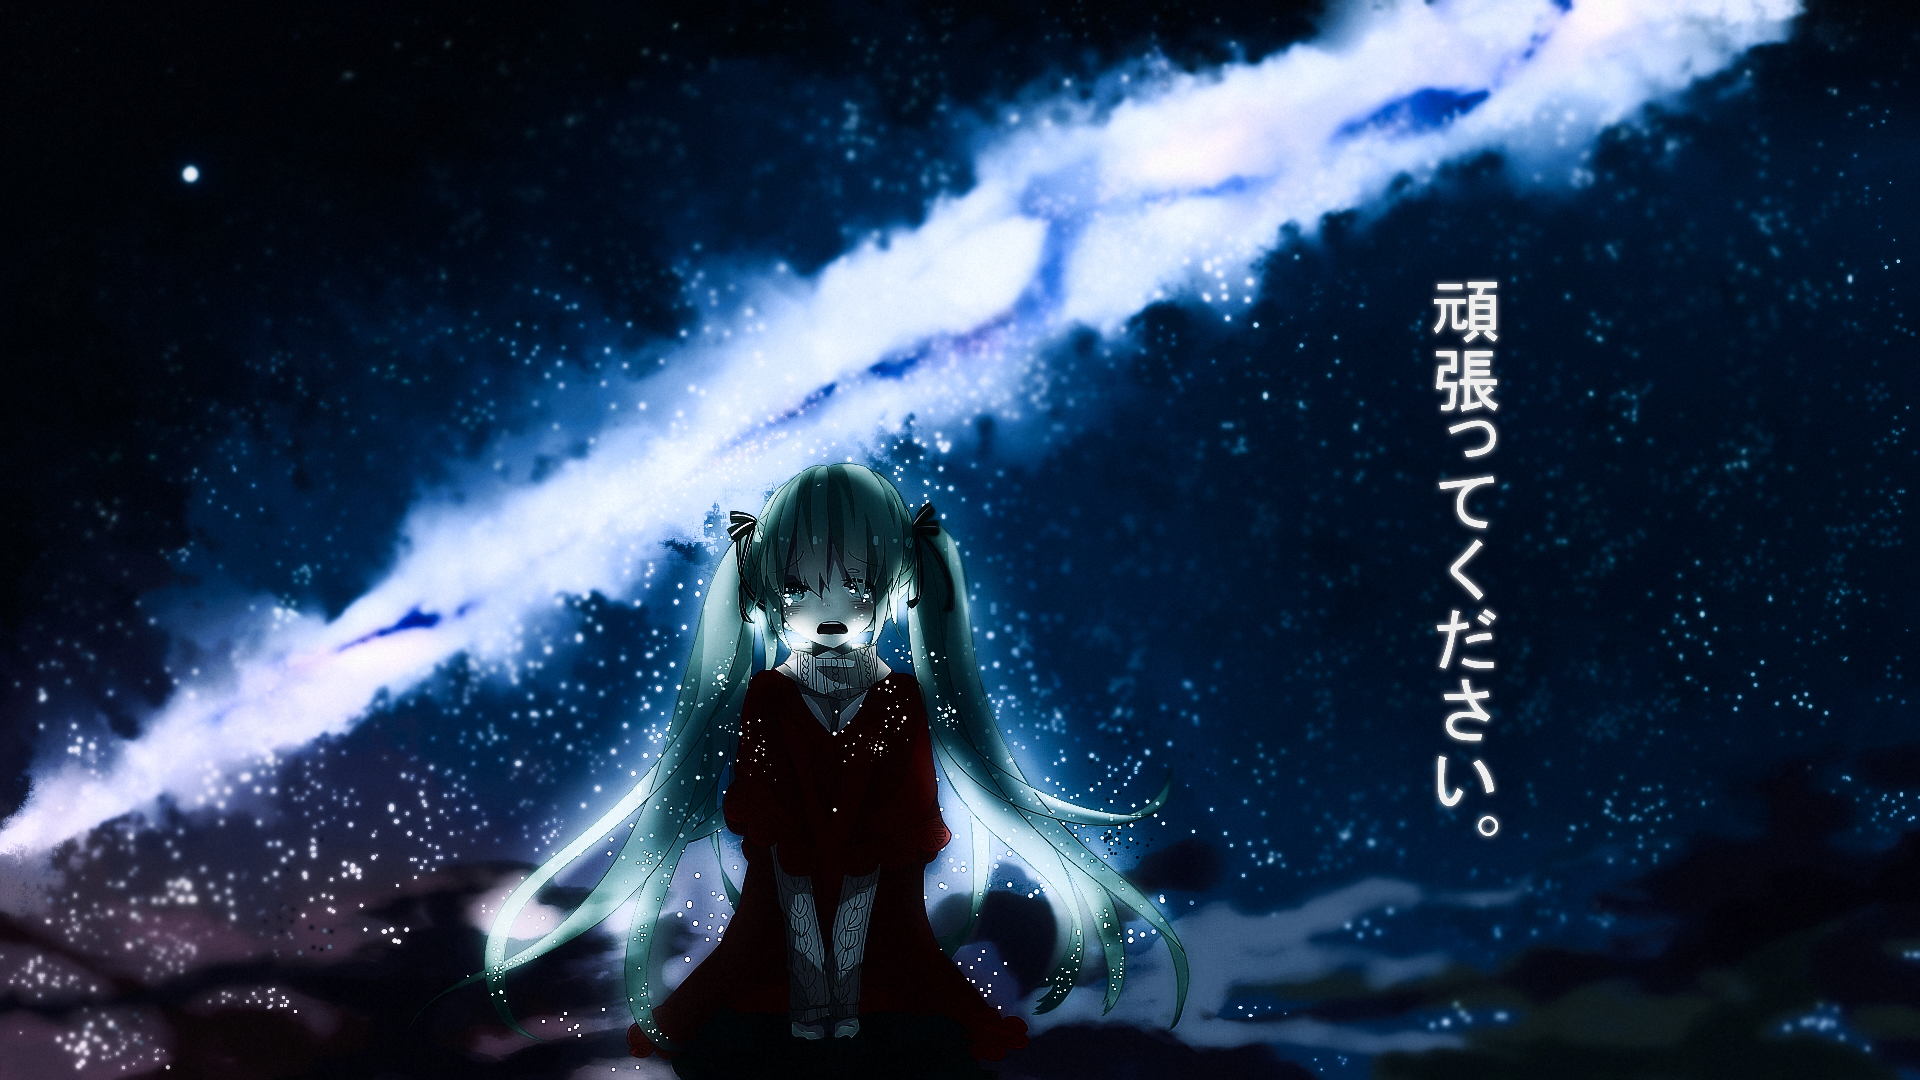 hatsune miku wallpaper,sky,darkness,cg artwork,anime,atmosphere